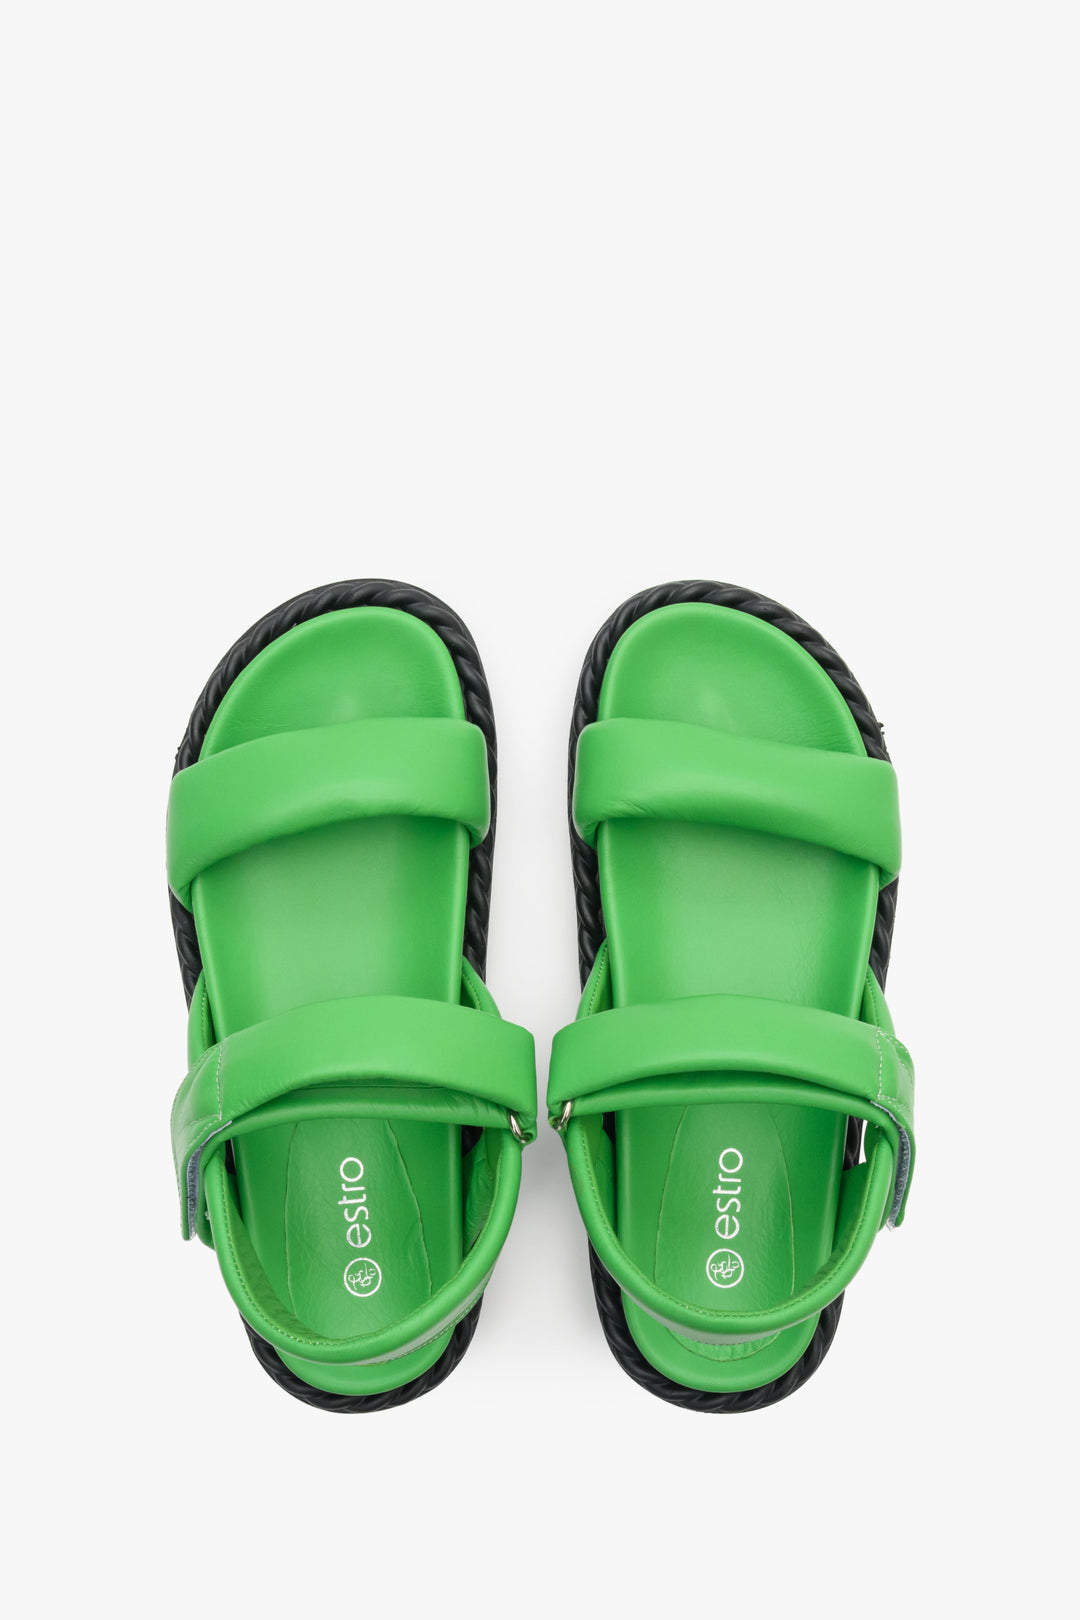 Estro women's green leather sandals.